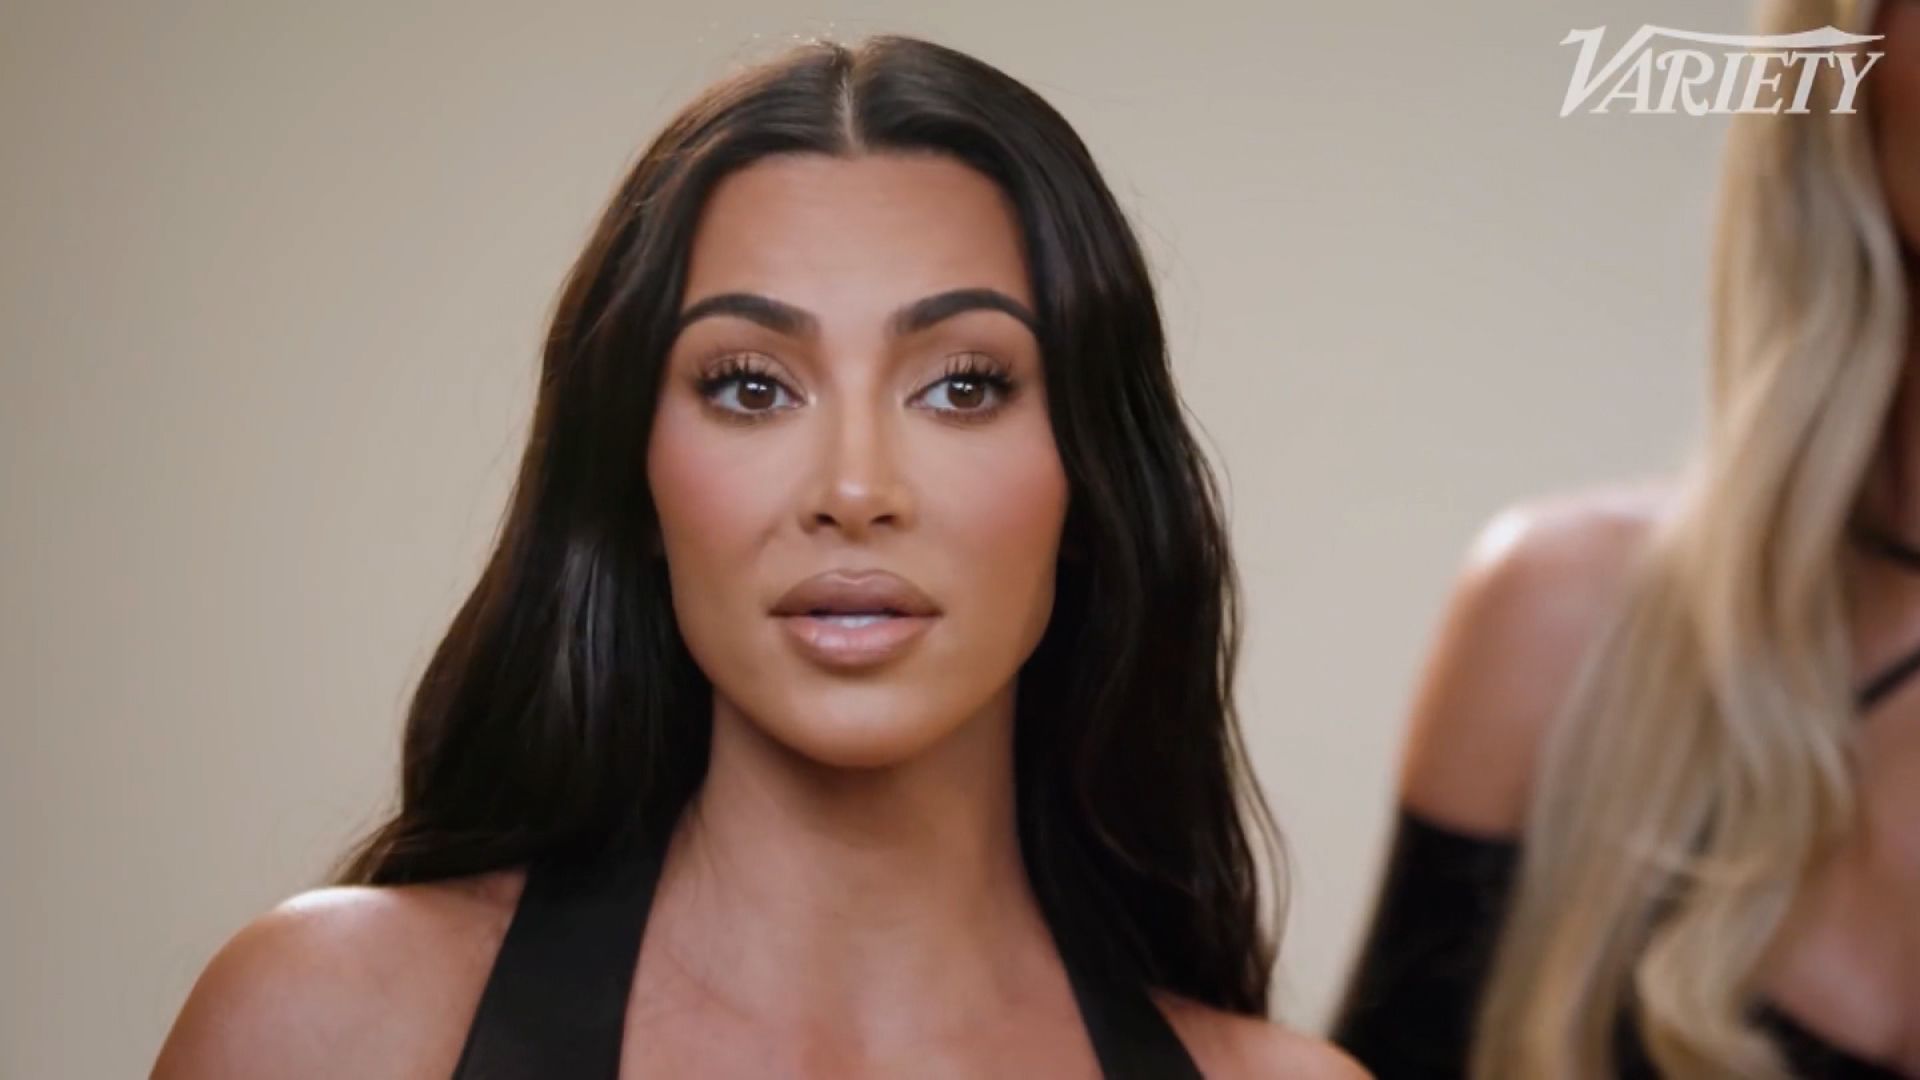 Kim Kadersion Vdo - Kim Kardashian cries as Kanye West retrieves rest of sex tape | CNN